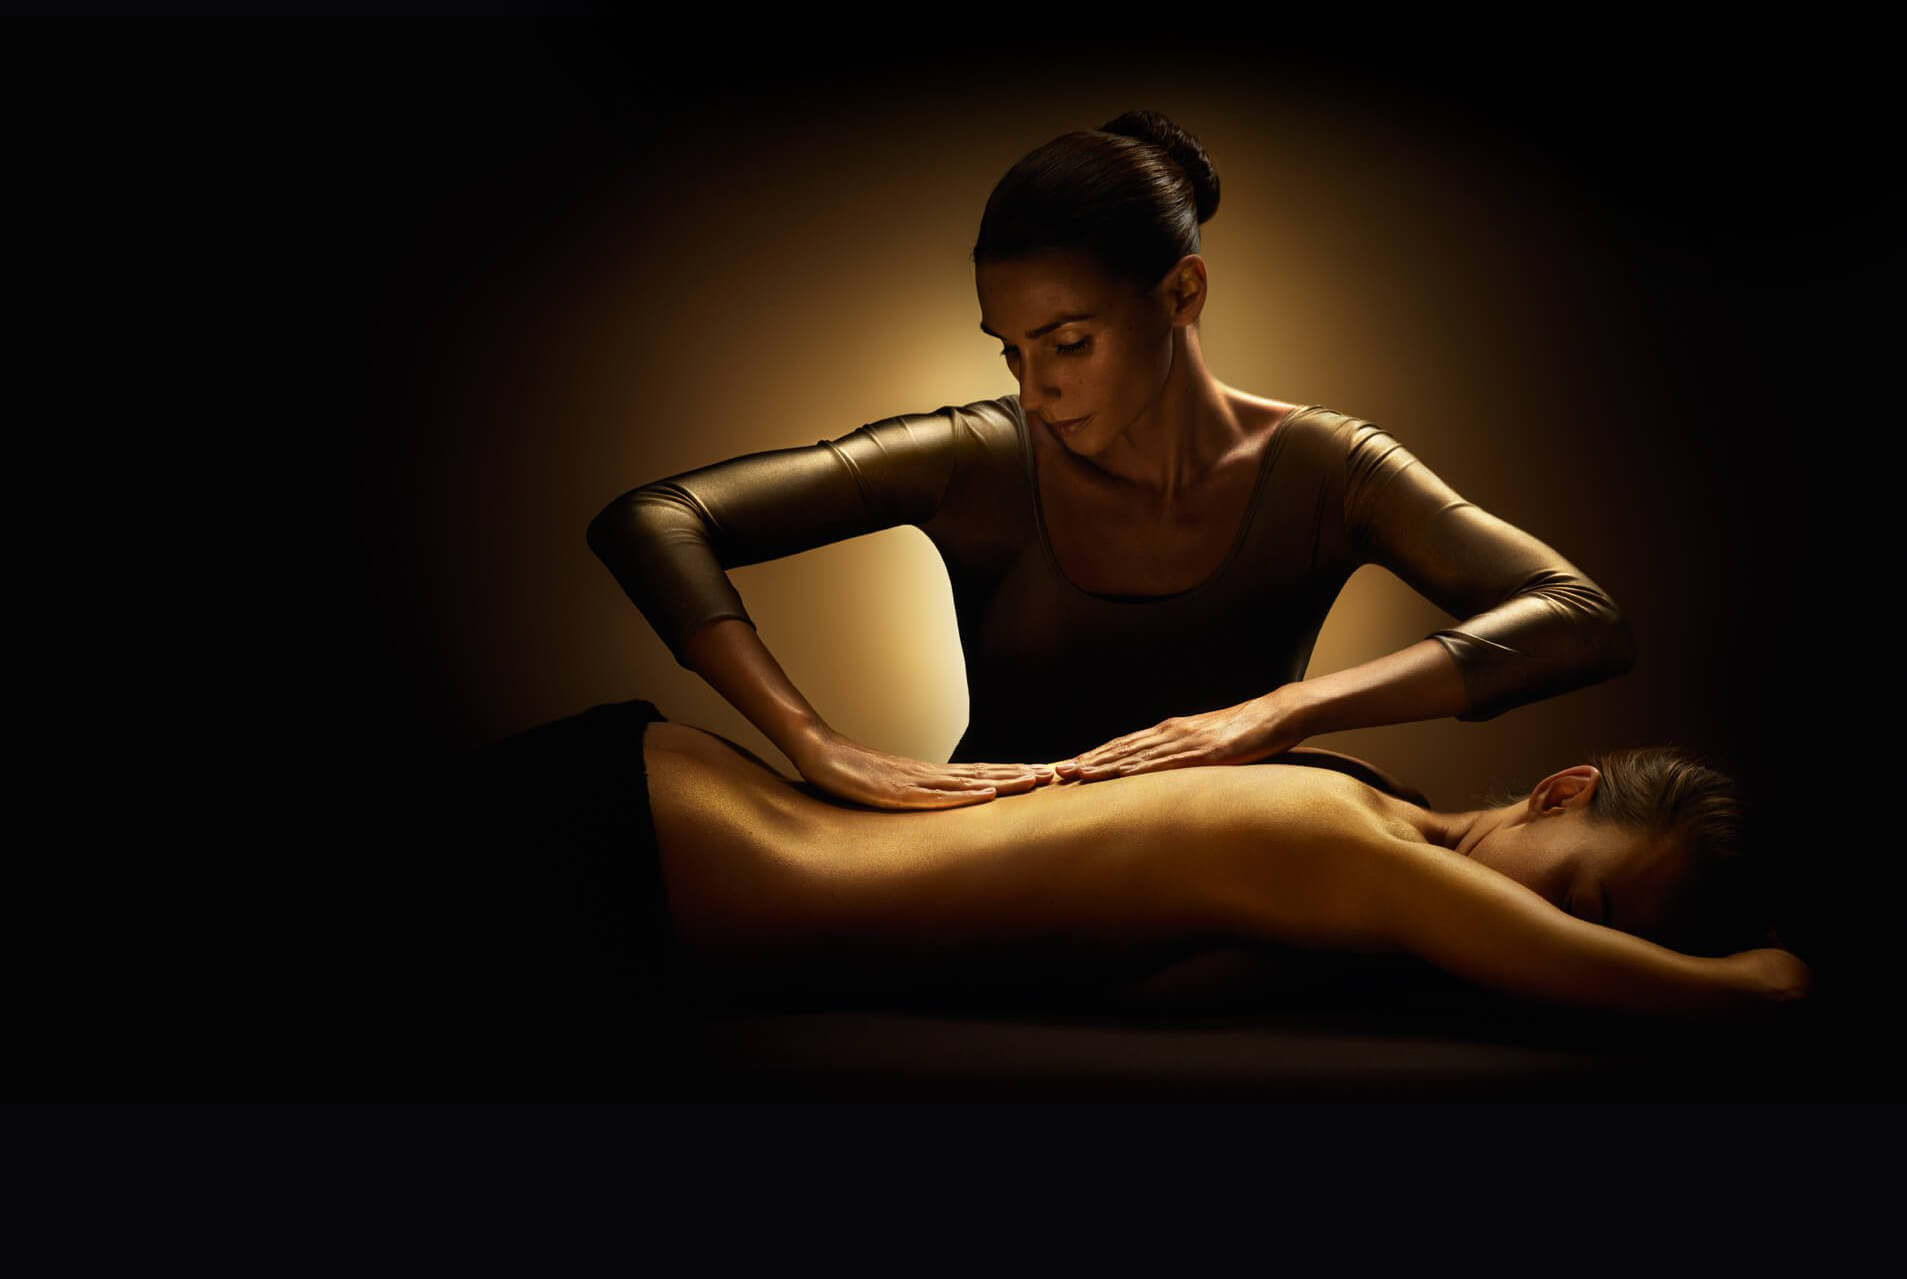 Ancient massage parlor. Массаж фон. Девушка в спа салоне. Красивое тело спа. Массаж тела Эстетика.